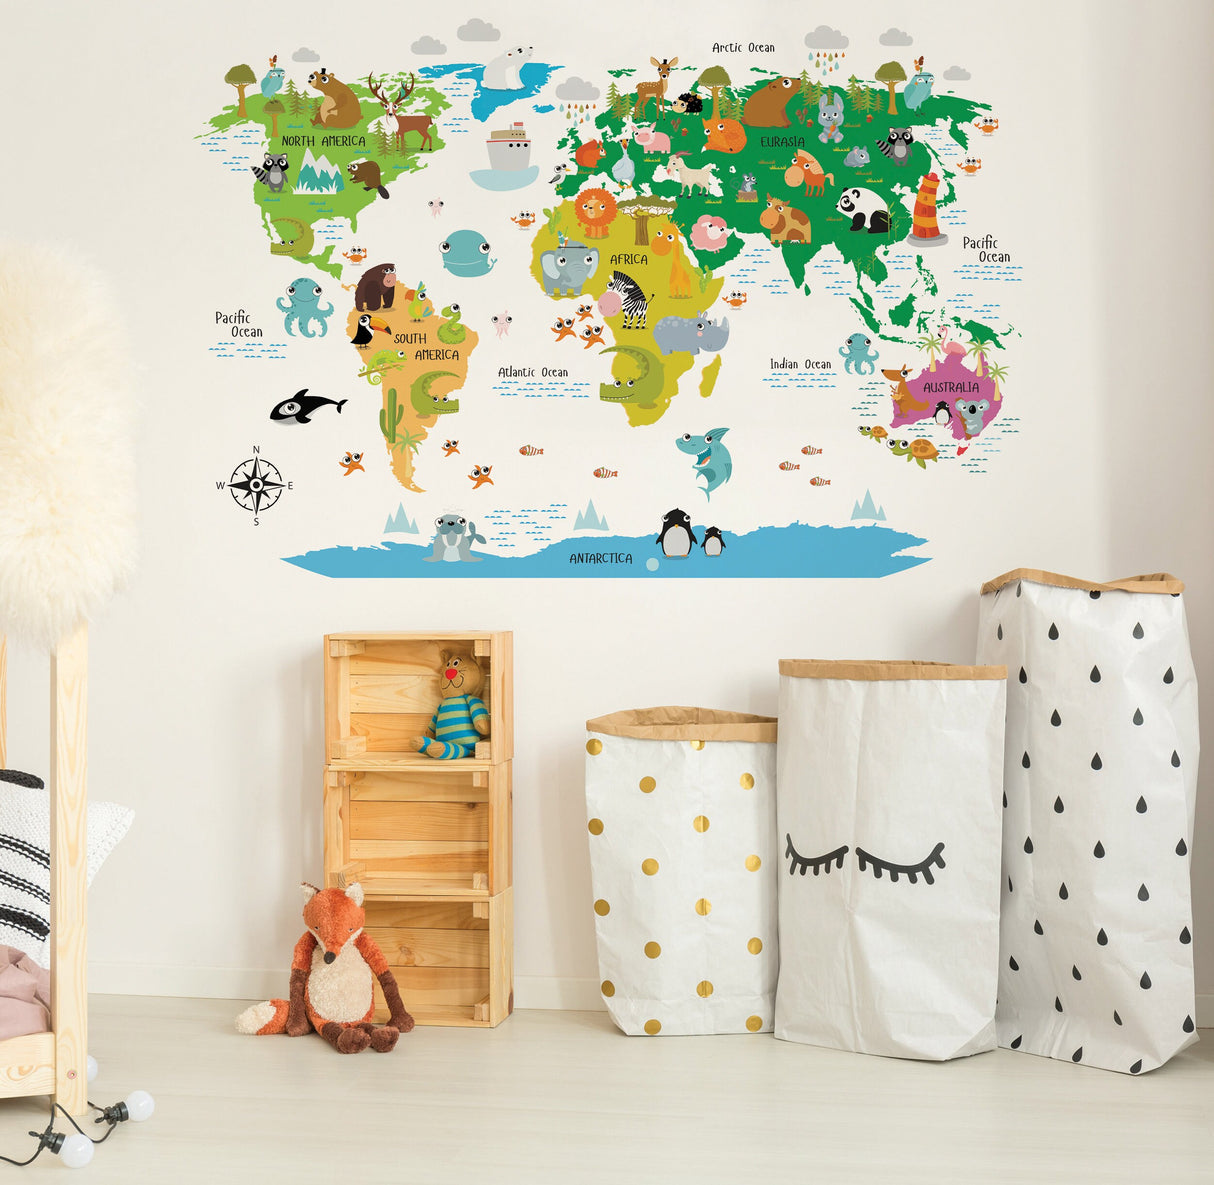 World Map Decal - Nursery Wall Sticker